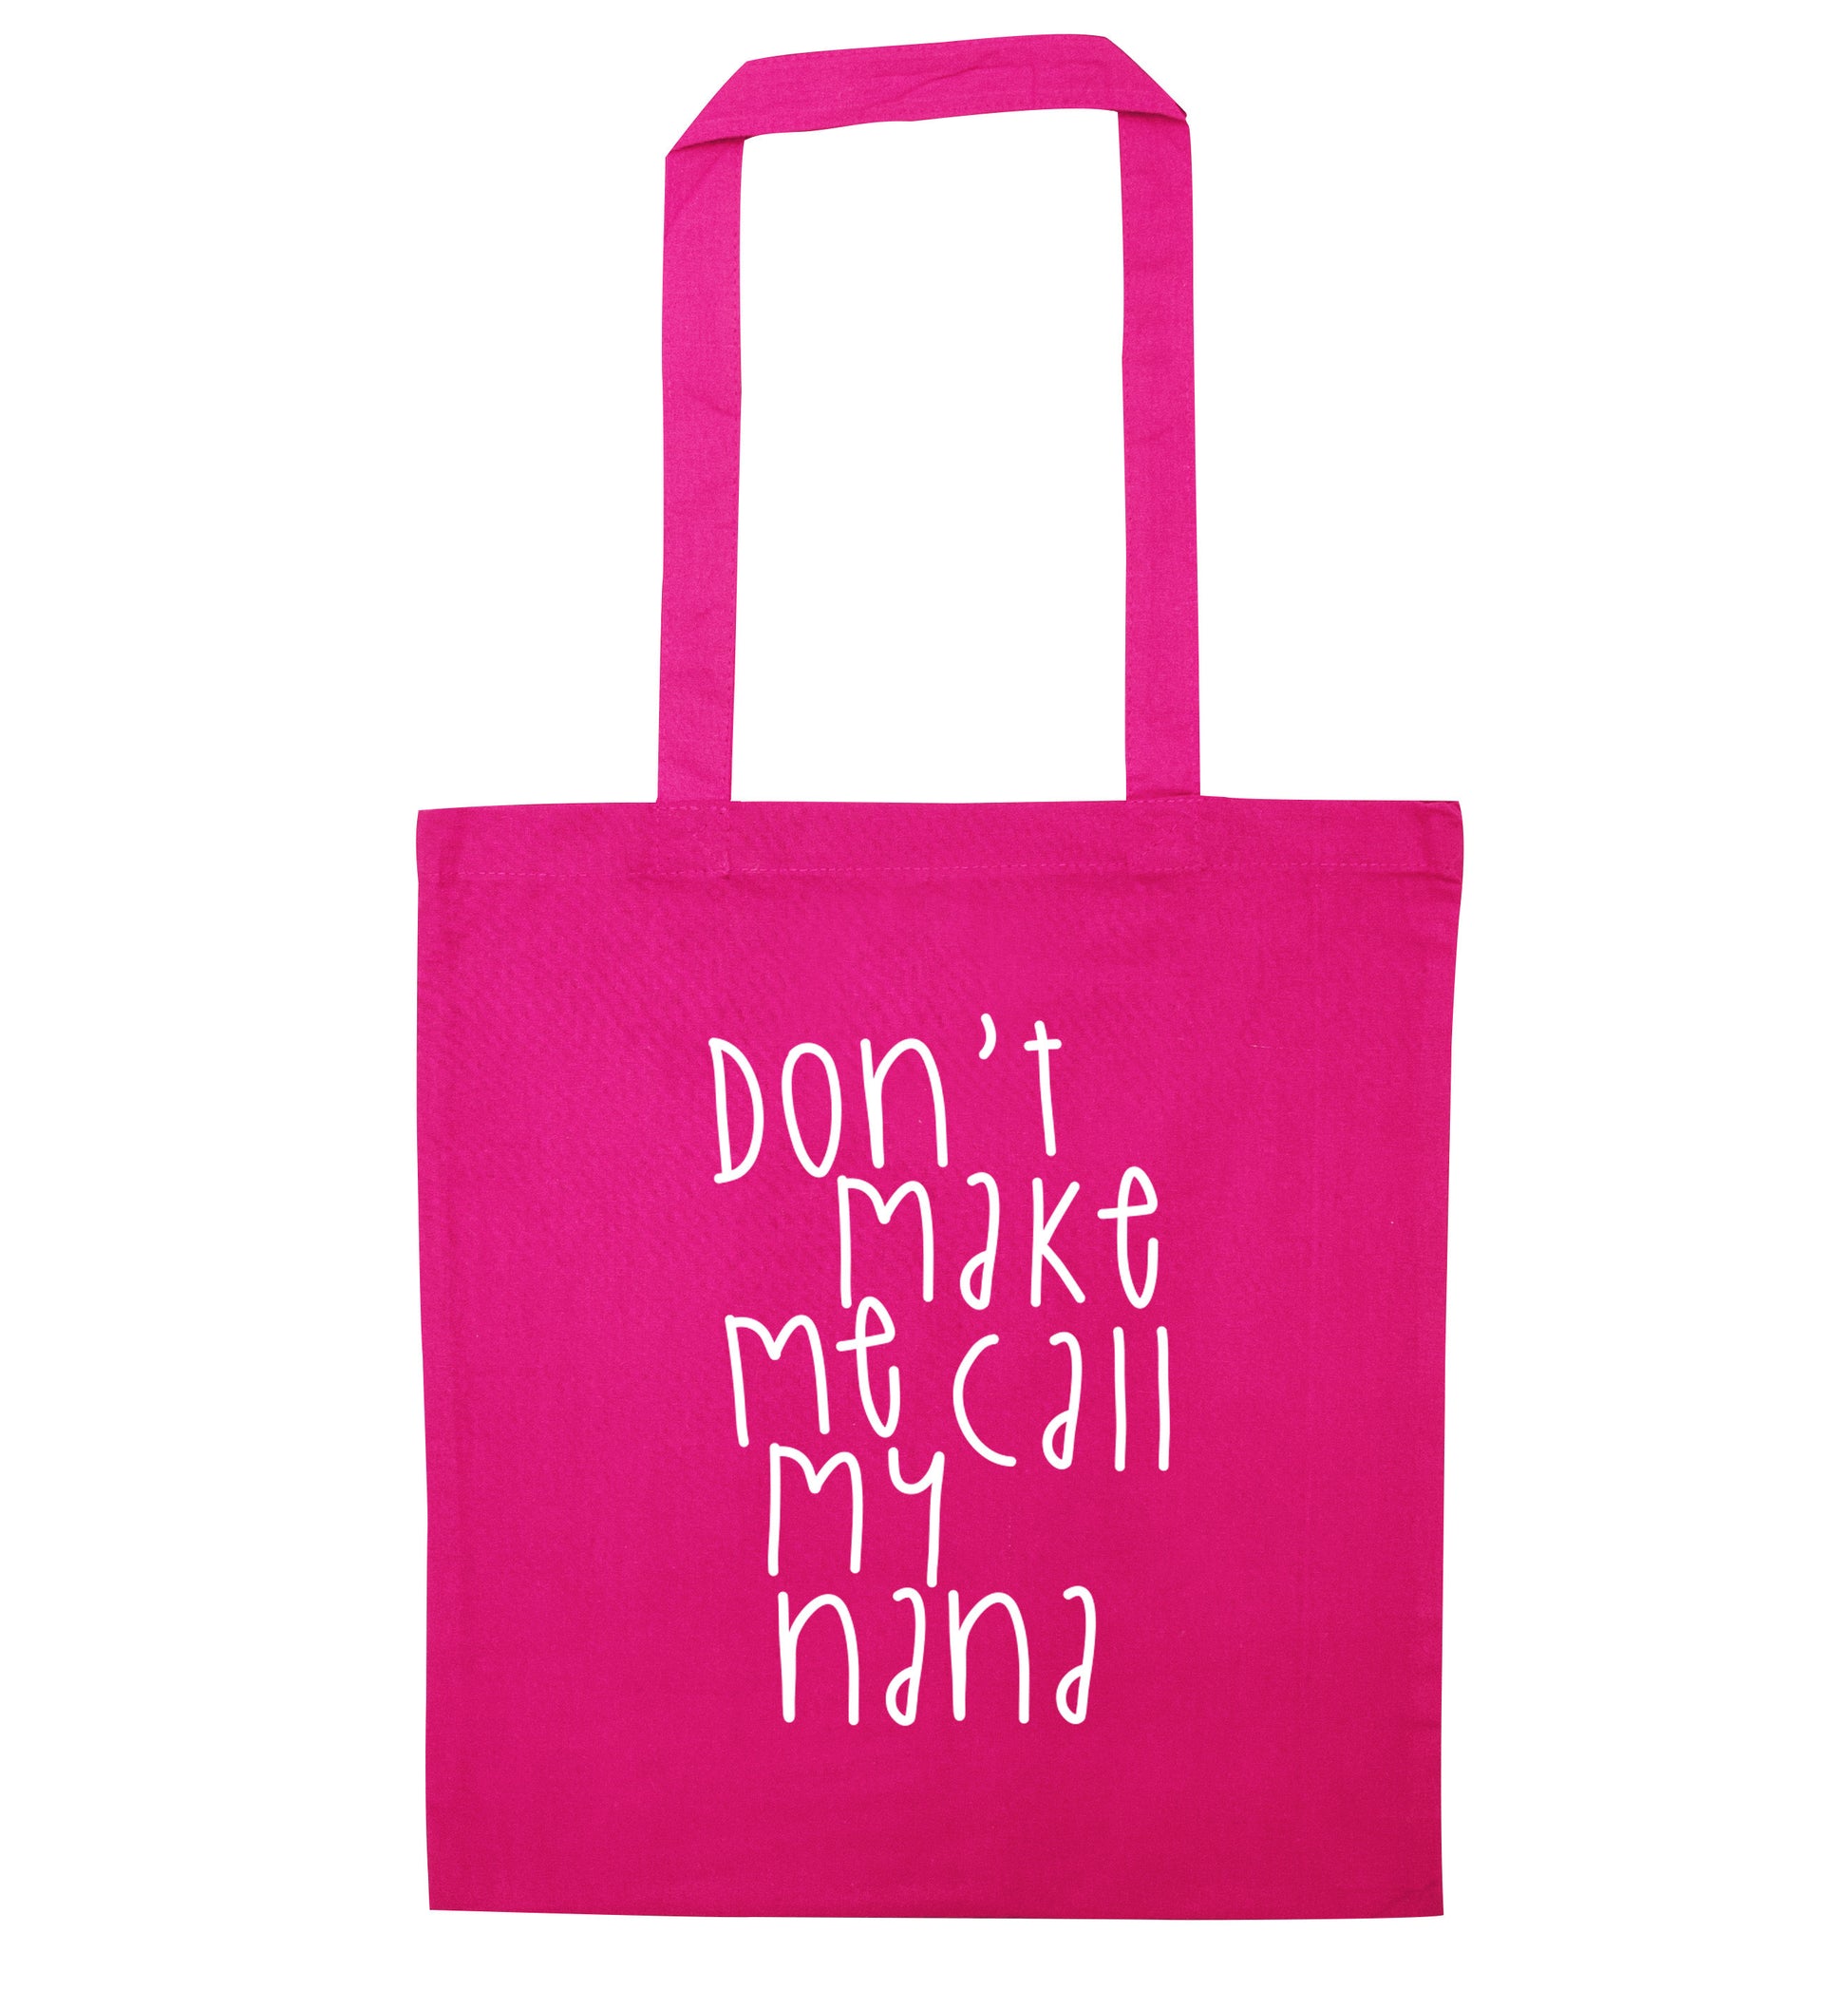 Don't make me call my nana pink tote bag